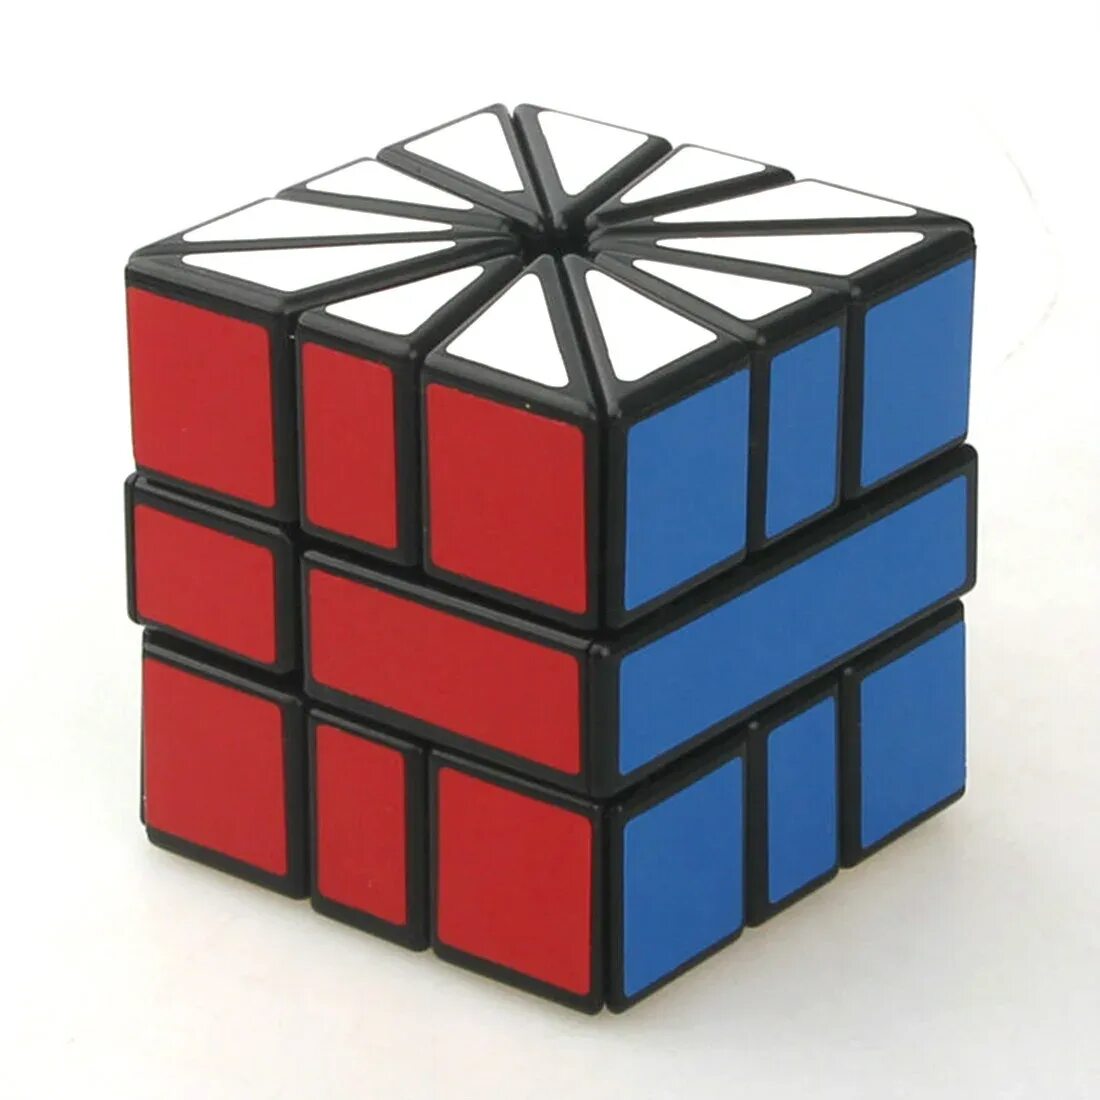 Square cube. CUBETWIST 3x3x3 Double Cube II. CUBETWIST Square-3. CUBETWIST черный белый квадрат II sq2 3x3x3. Зеркальный куб.